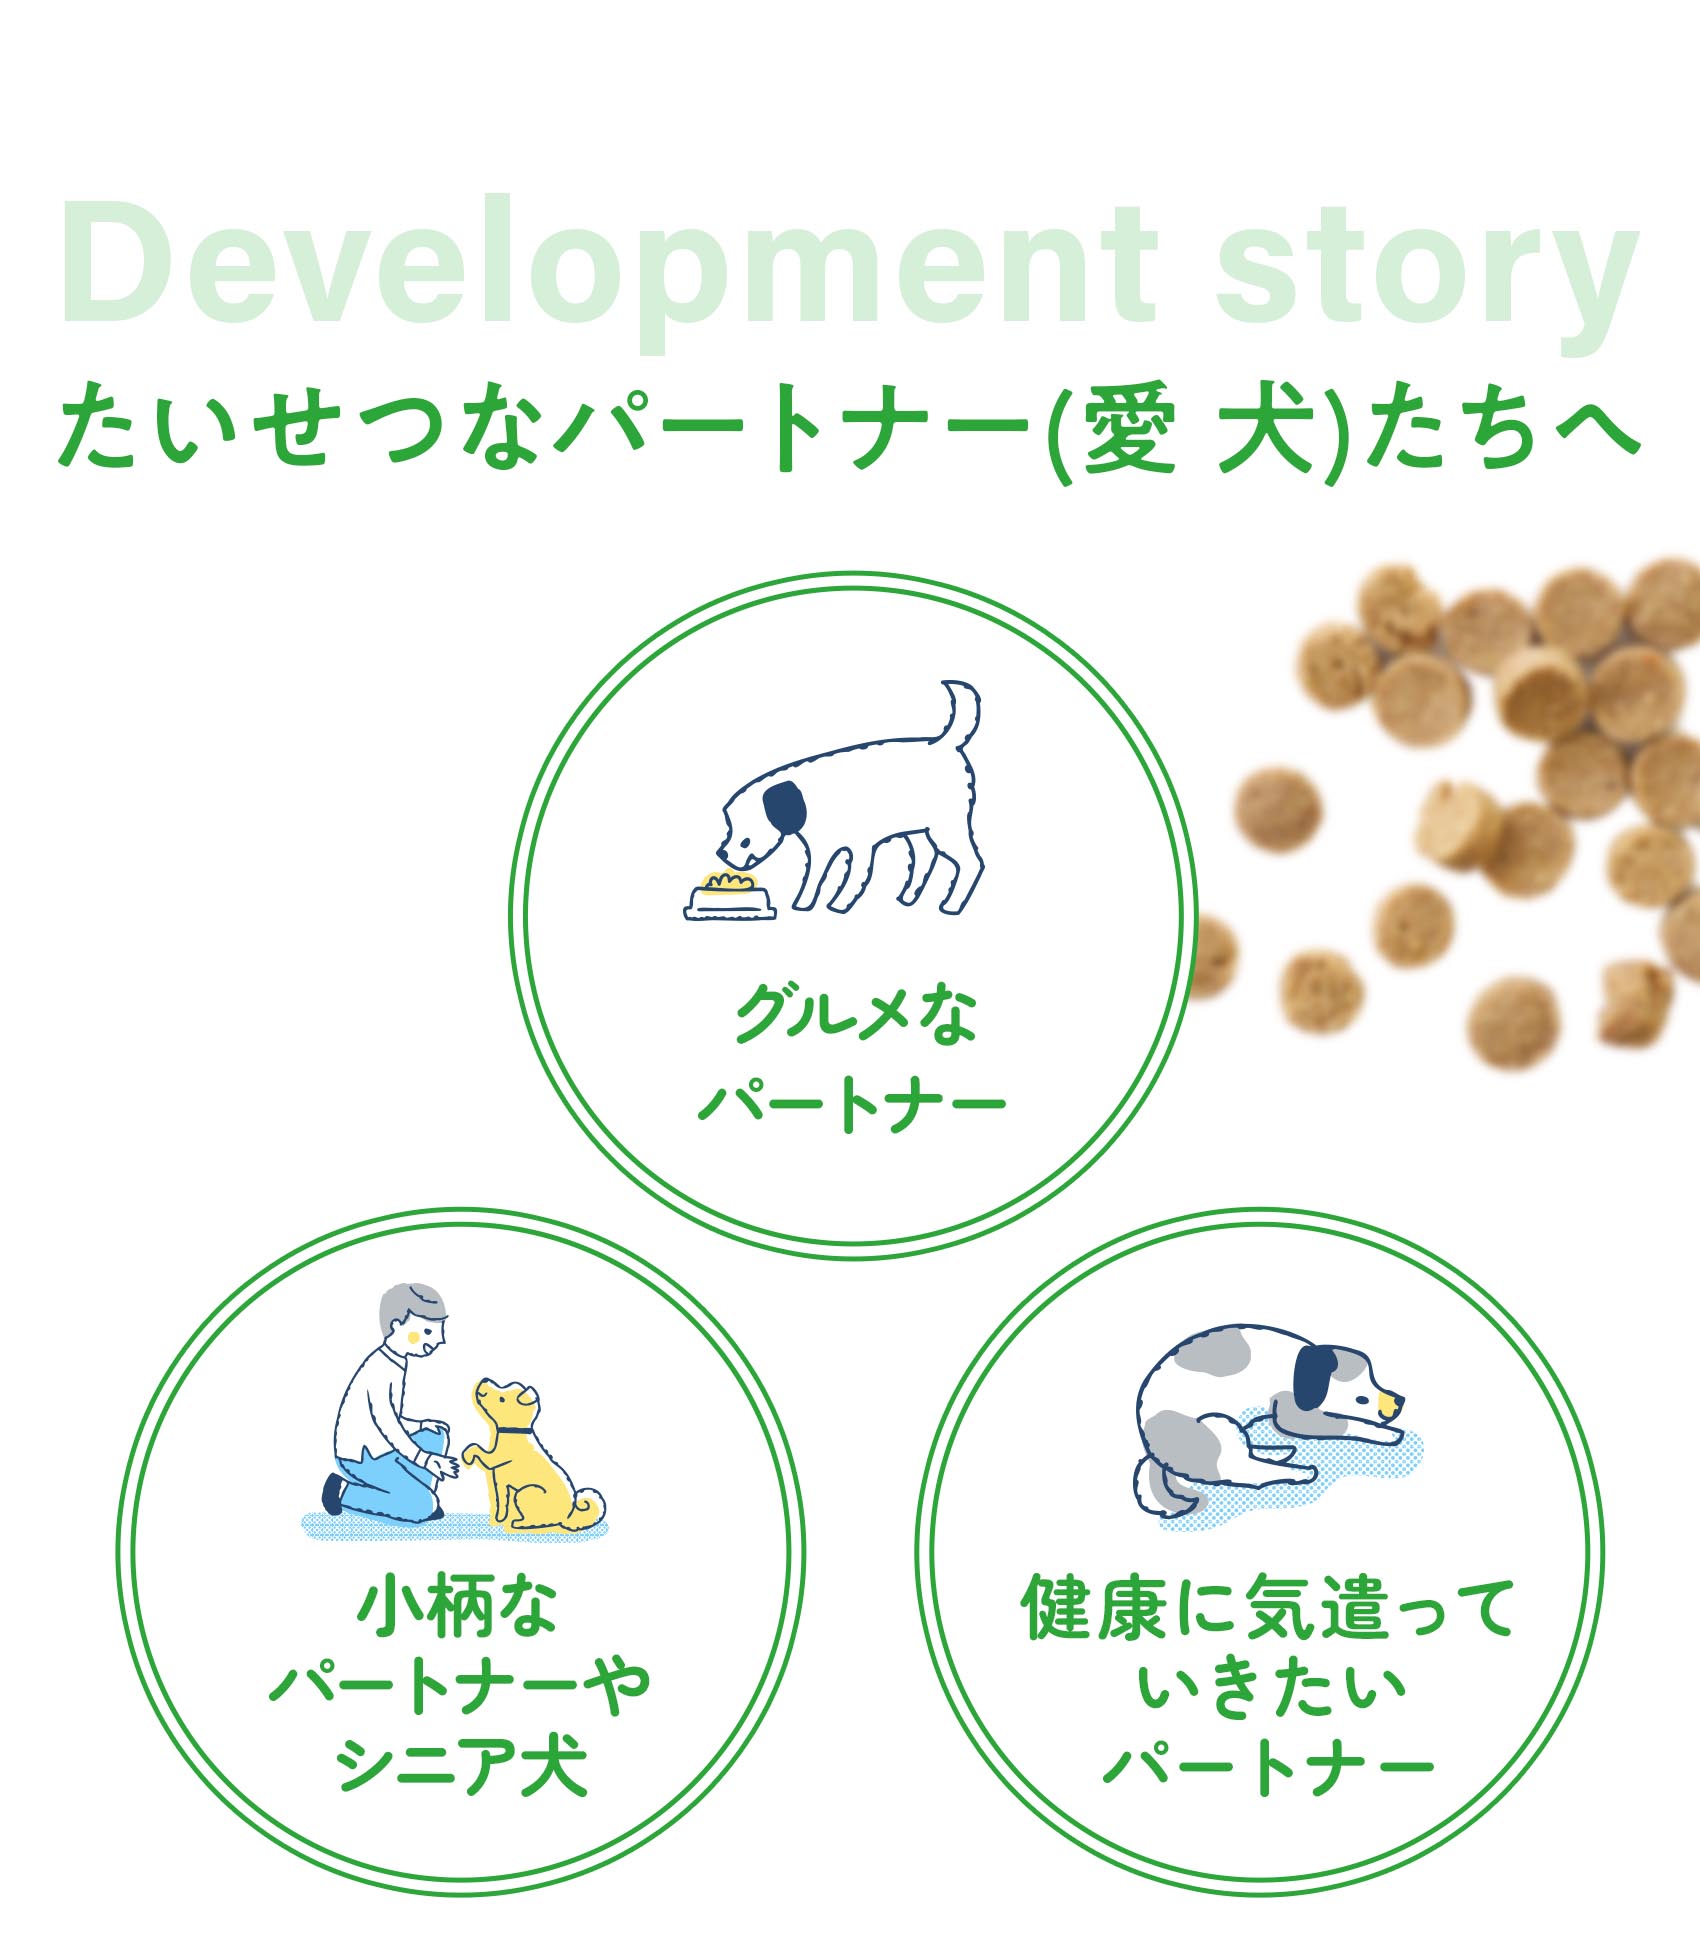 Development Story